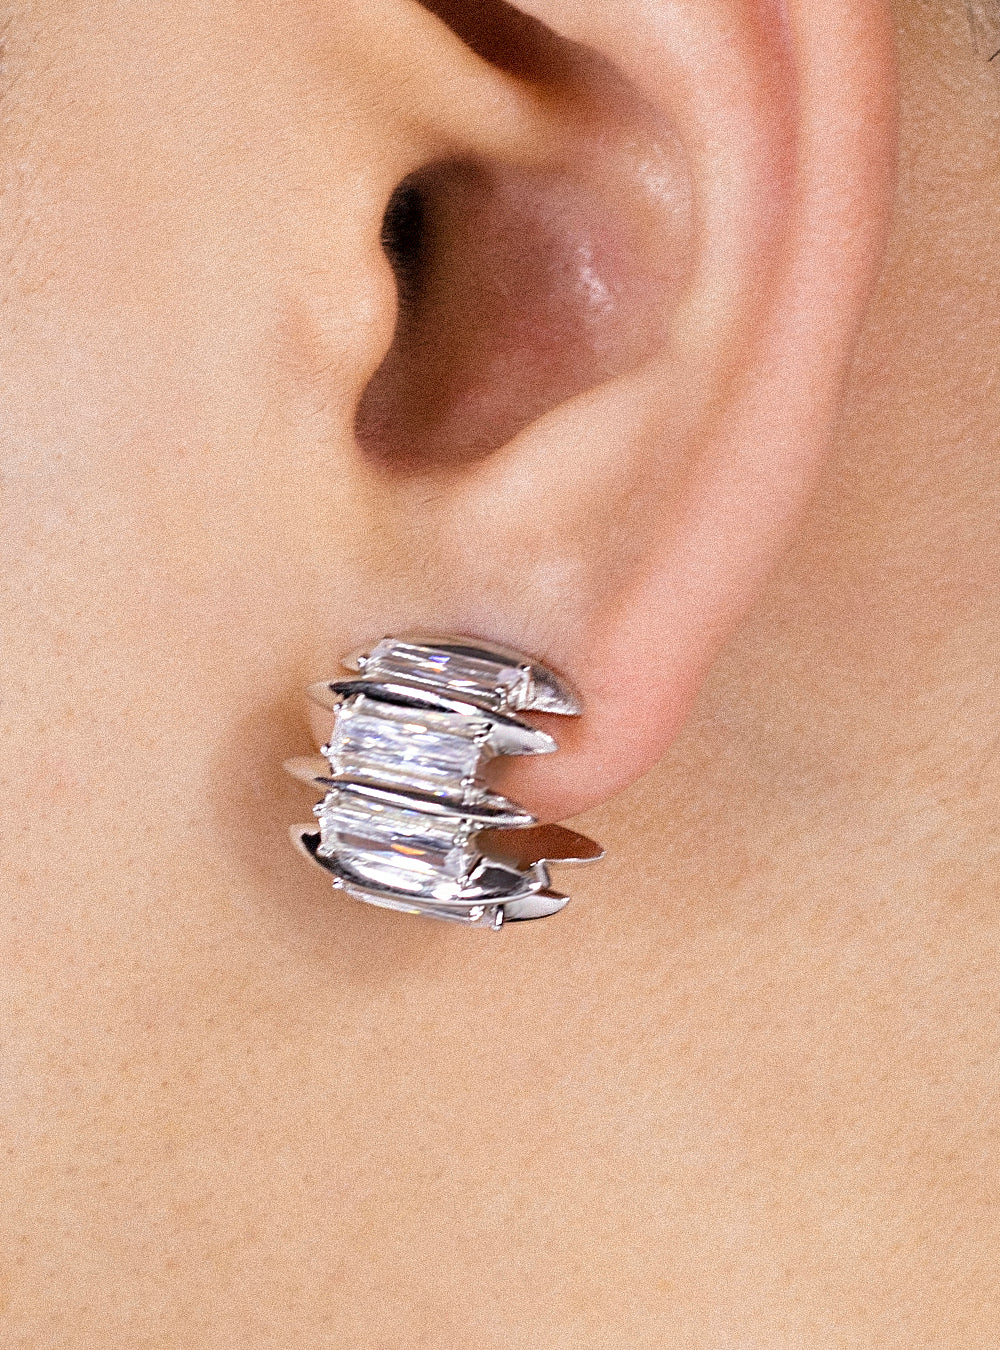 A woman's ear with a Talon eternity earring by MIDNIGHTFACTORY ear cuff.